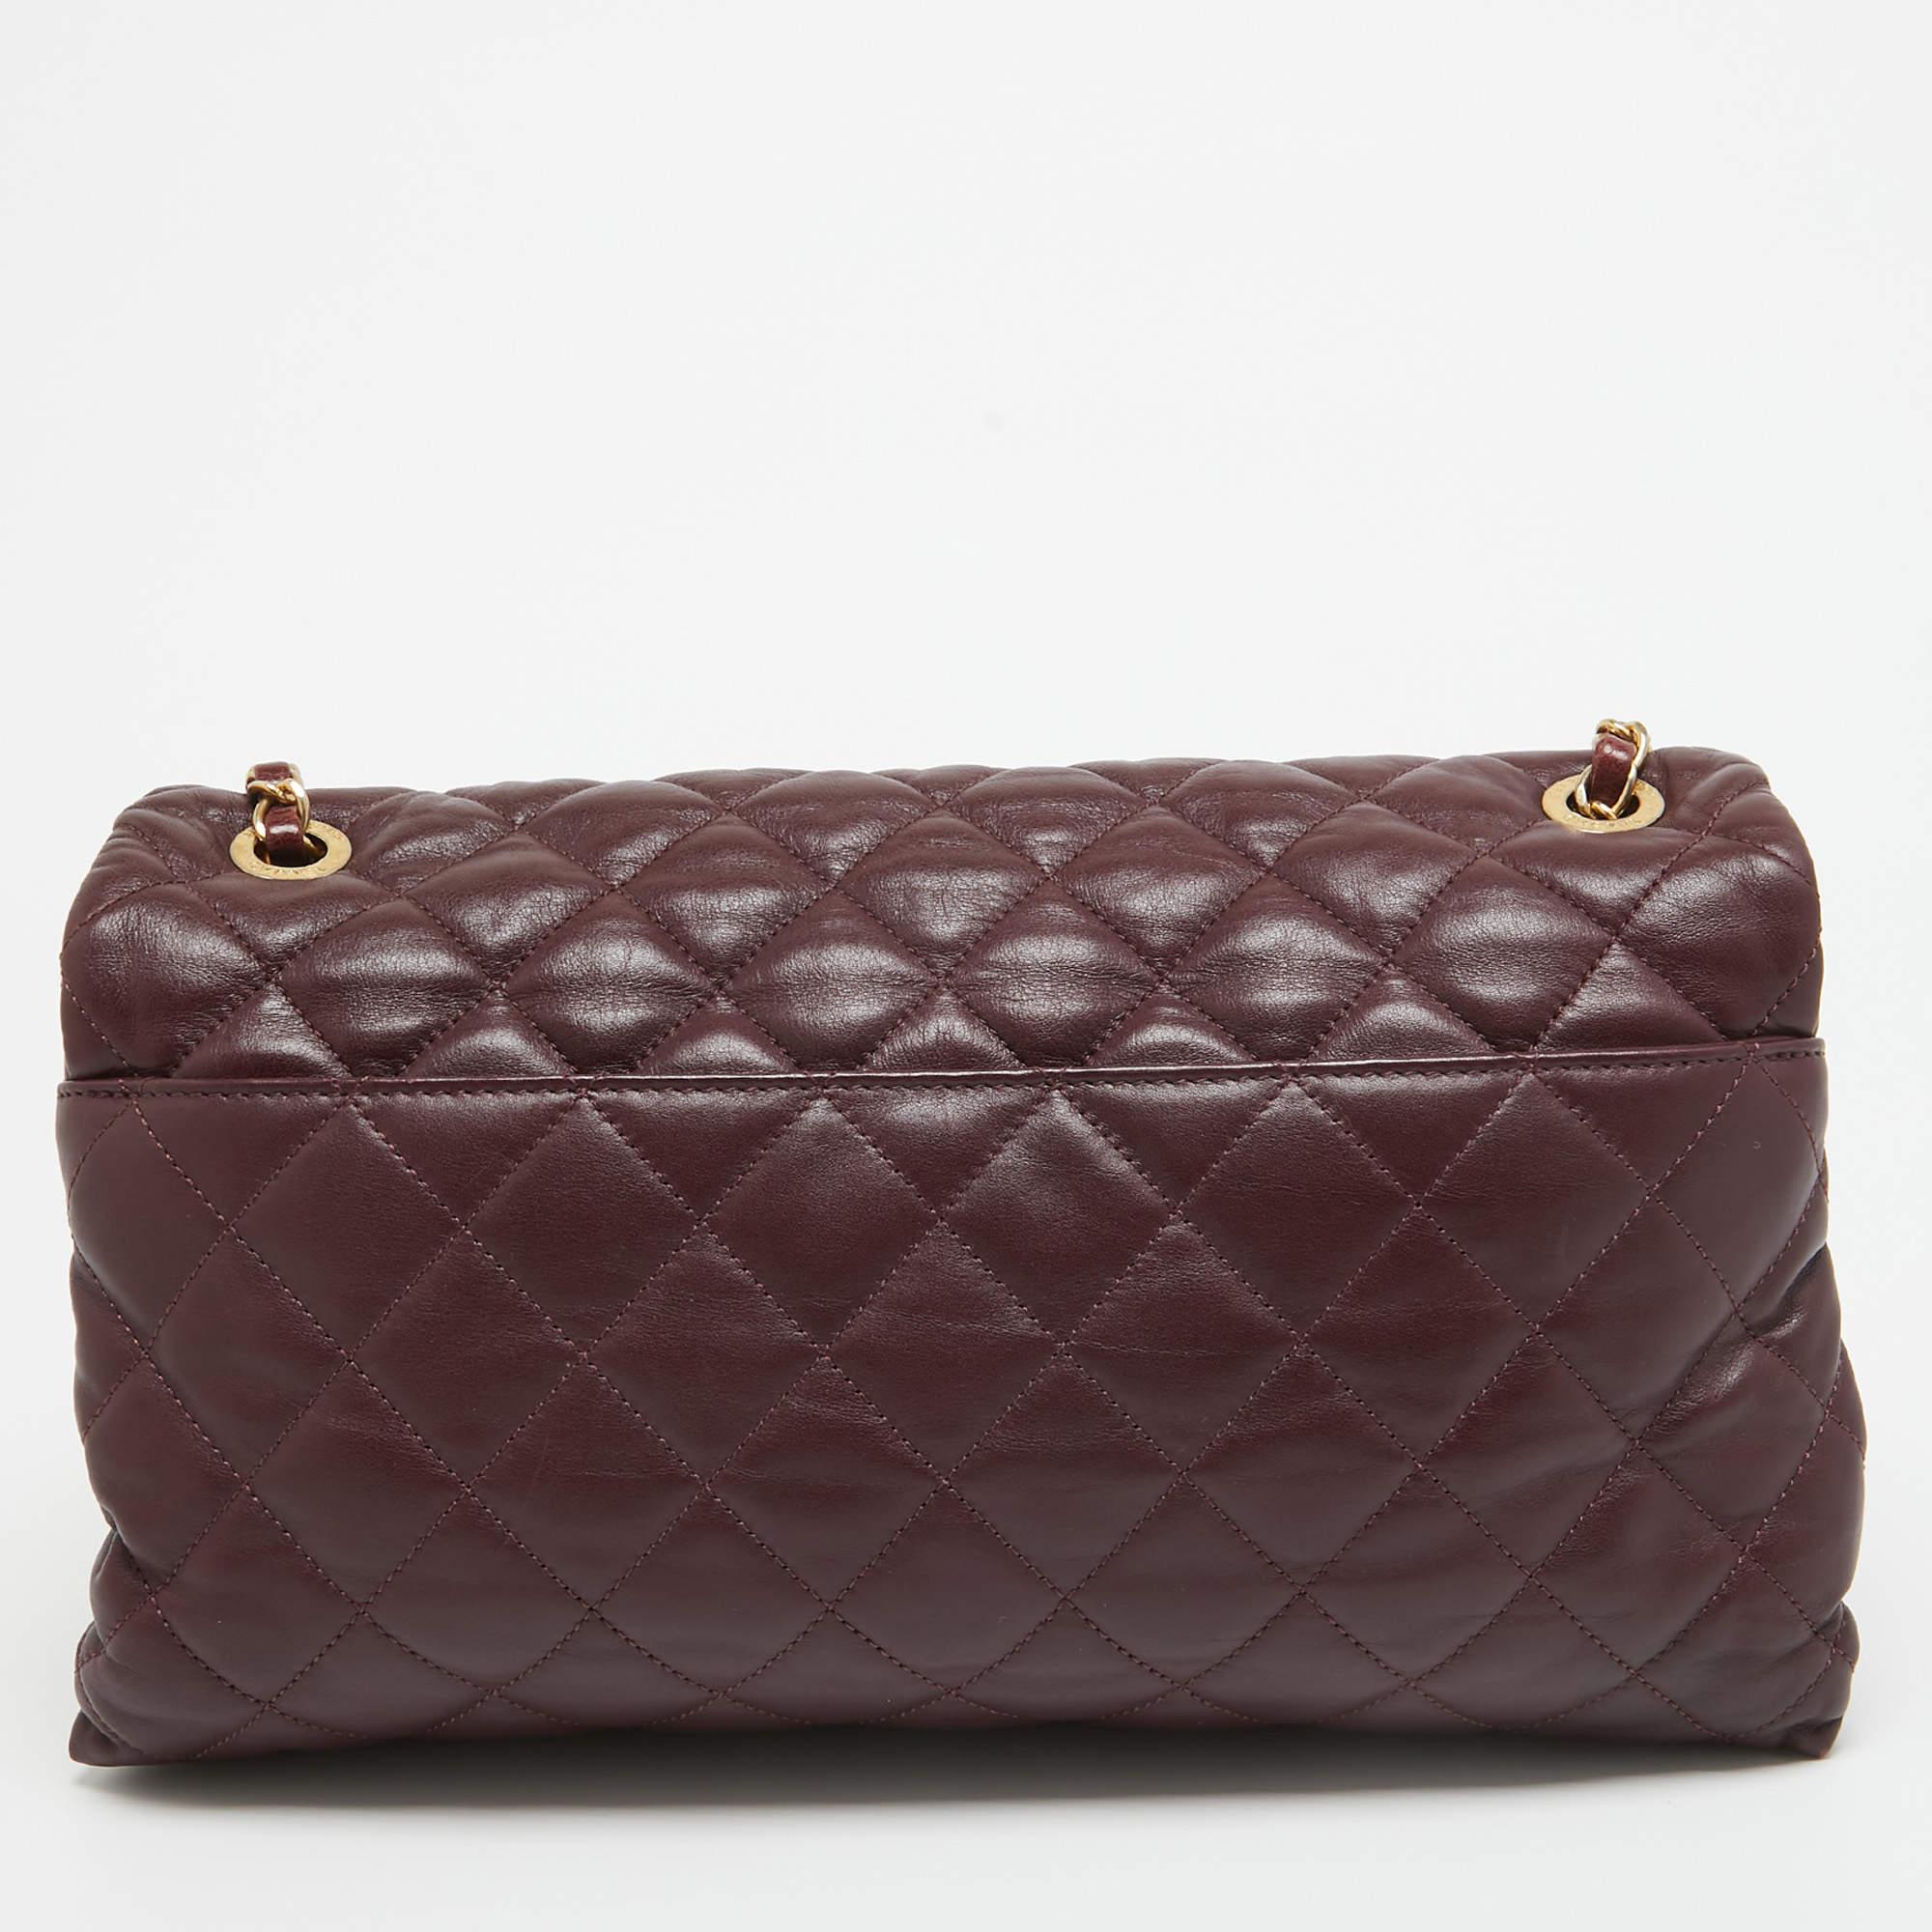 Chanel Burgundy Quilted Leather Soft Elegance Flap Bag For Sale 13